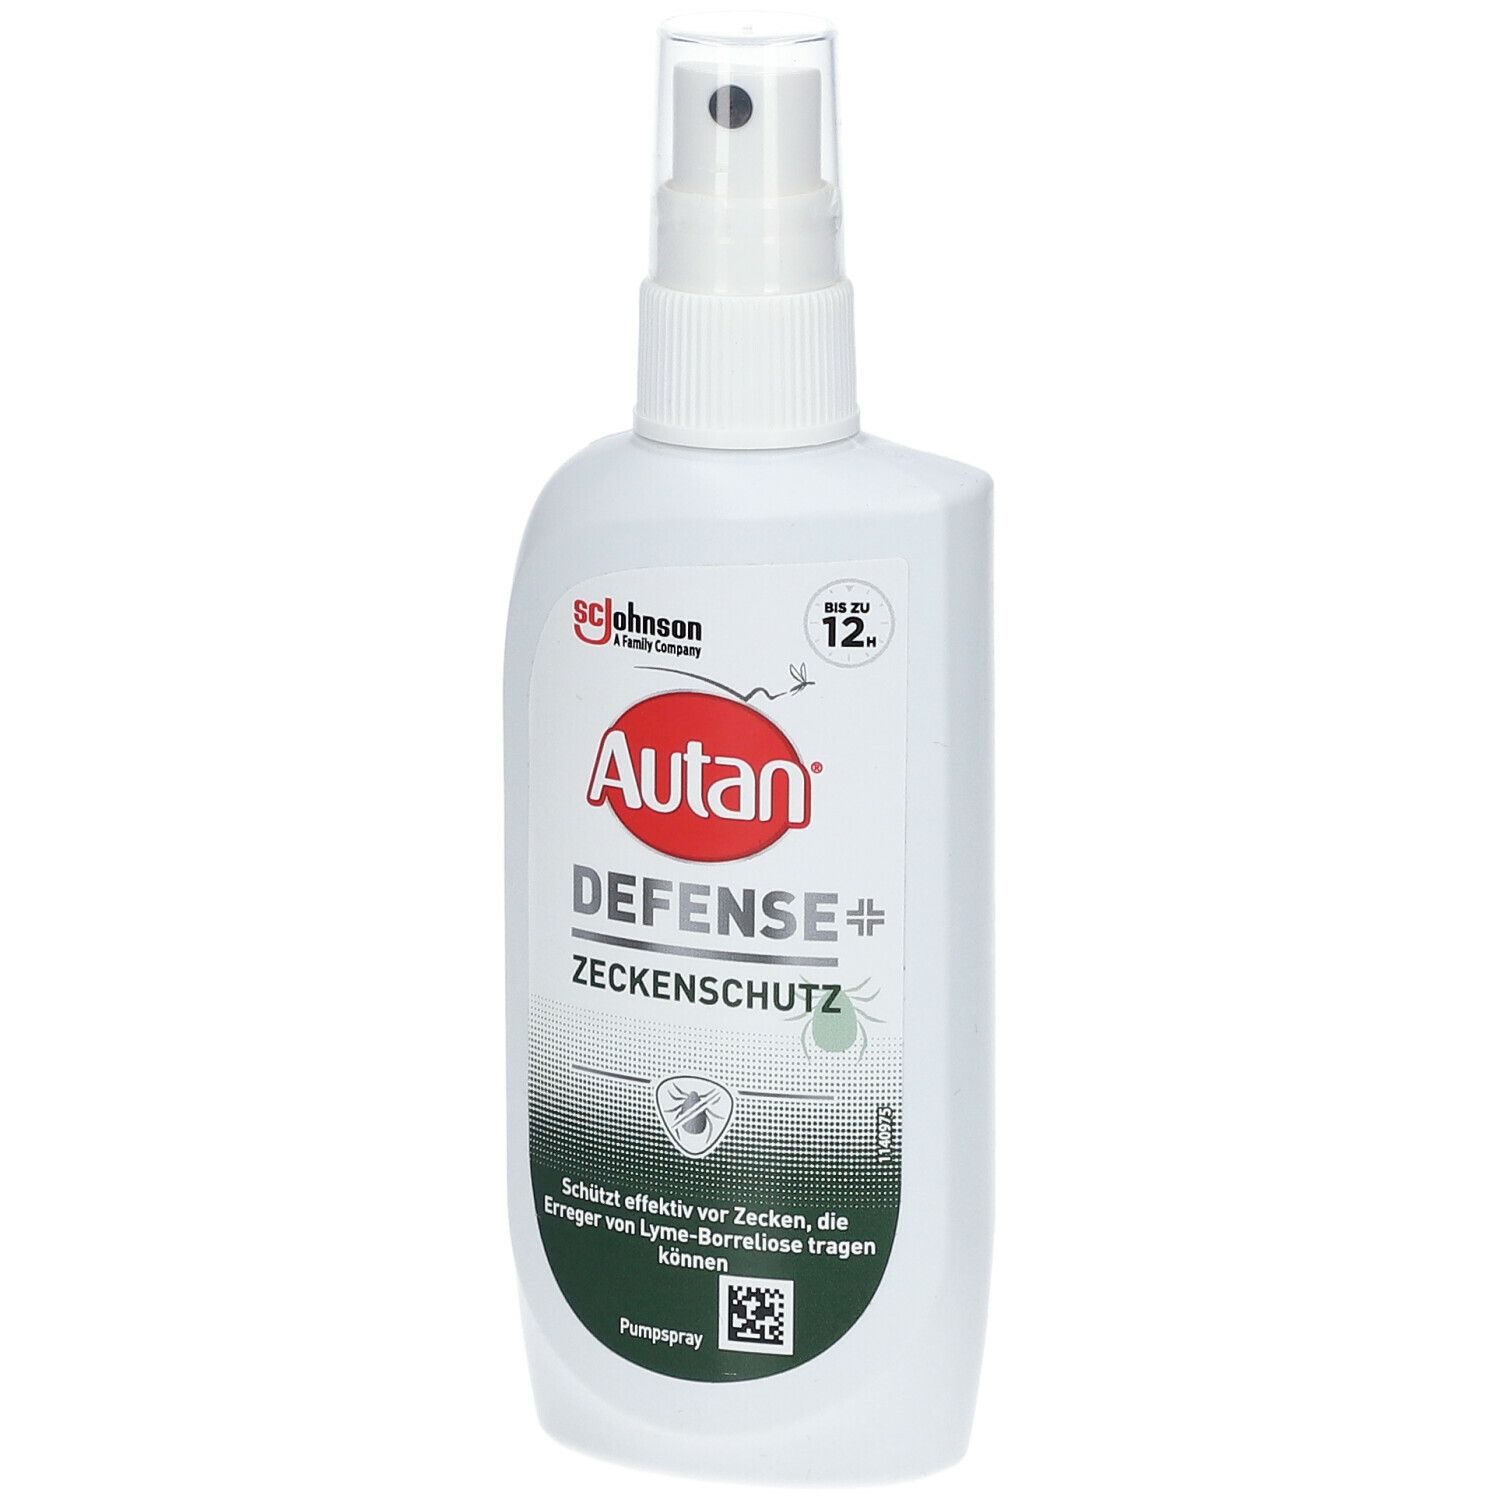 Autan® Defense+ Zeckenschutz